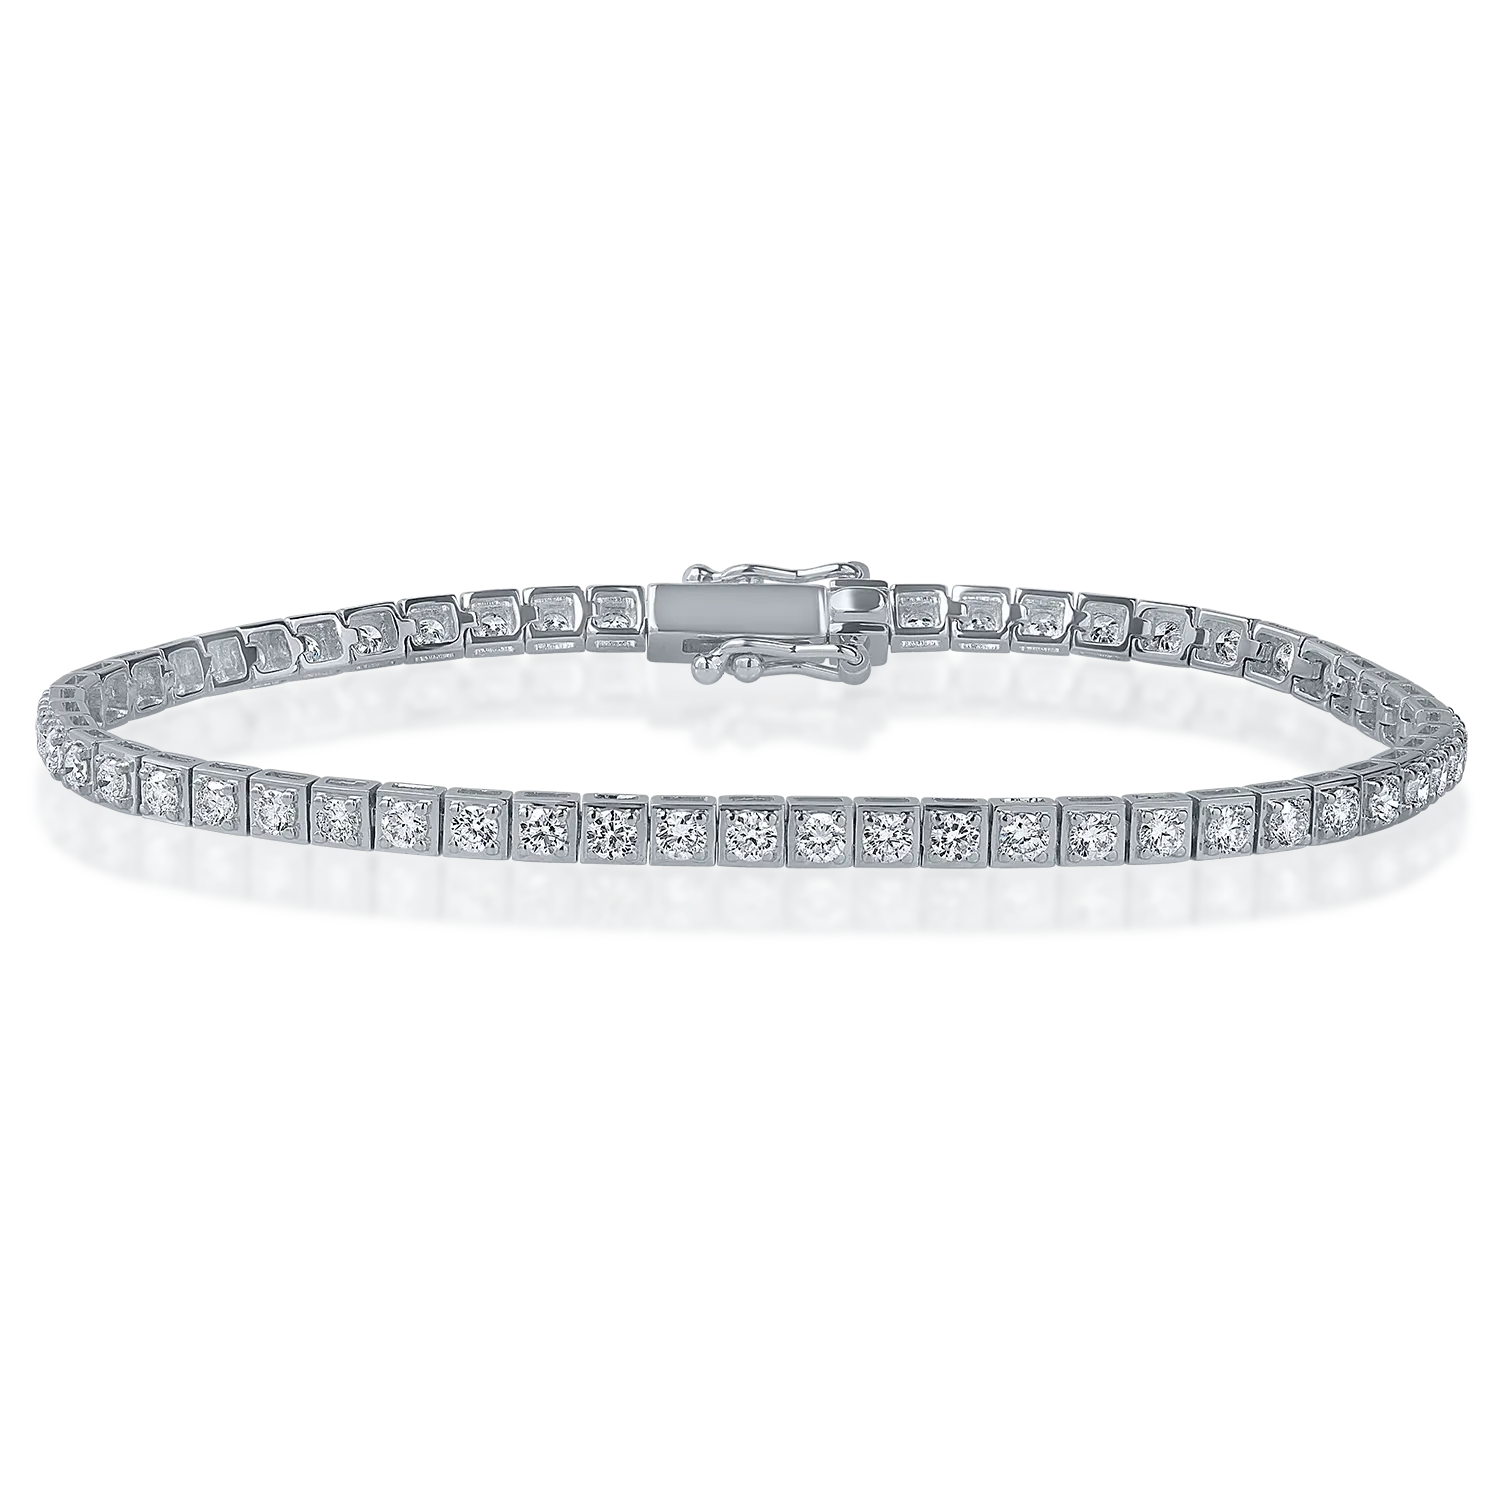 White gold tennis bracelet with 1.9ct diamonds